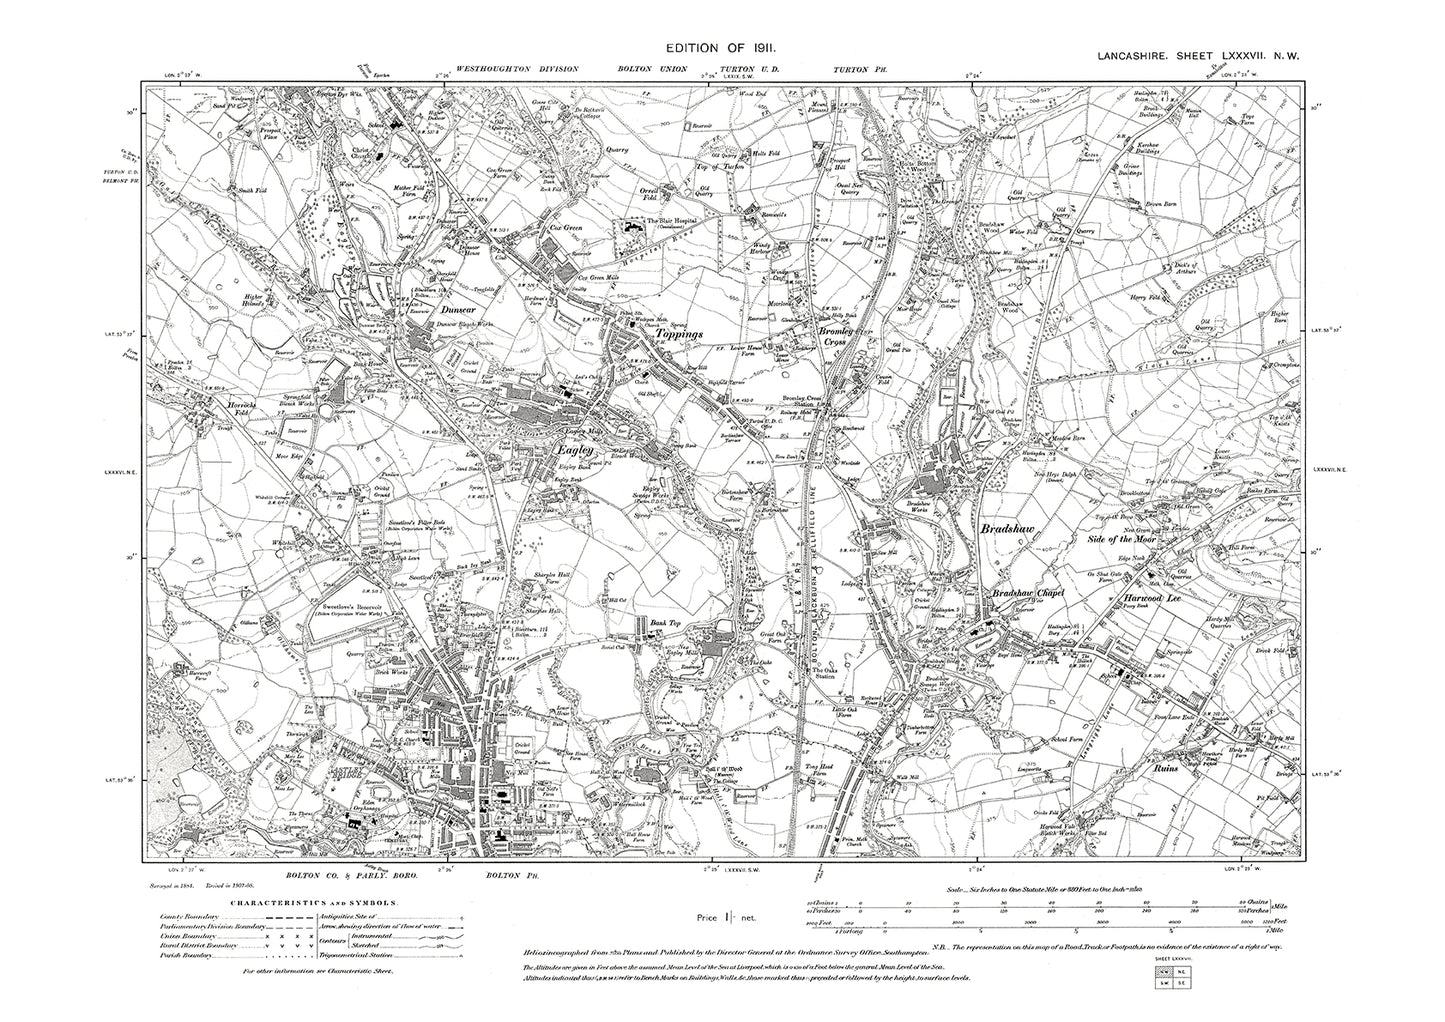 Bolton (north), Bradshaw, Eagley - Lancashire in 1911 : 87NW